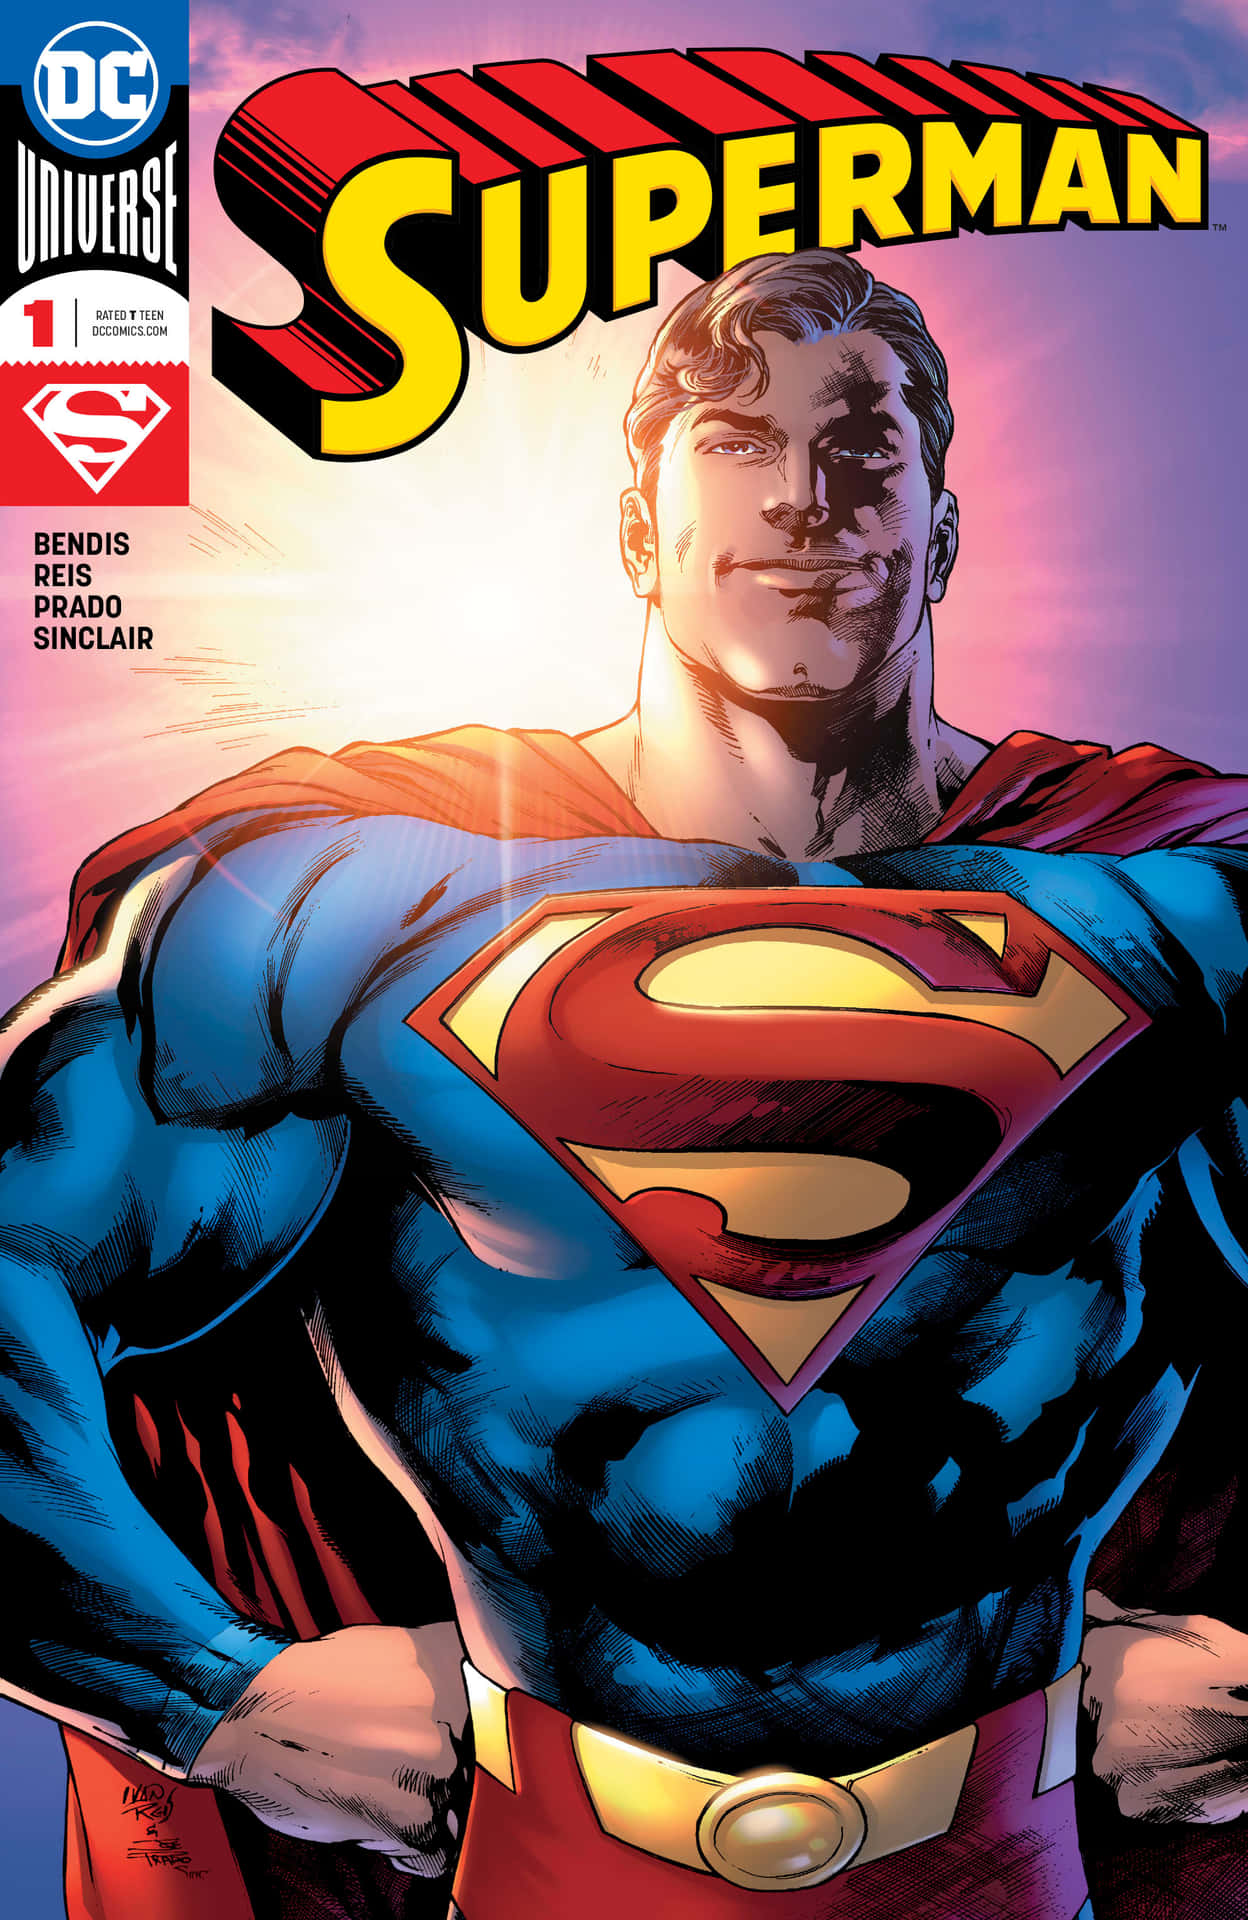 Superman, the Man of Steel